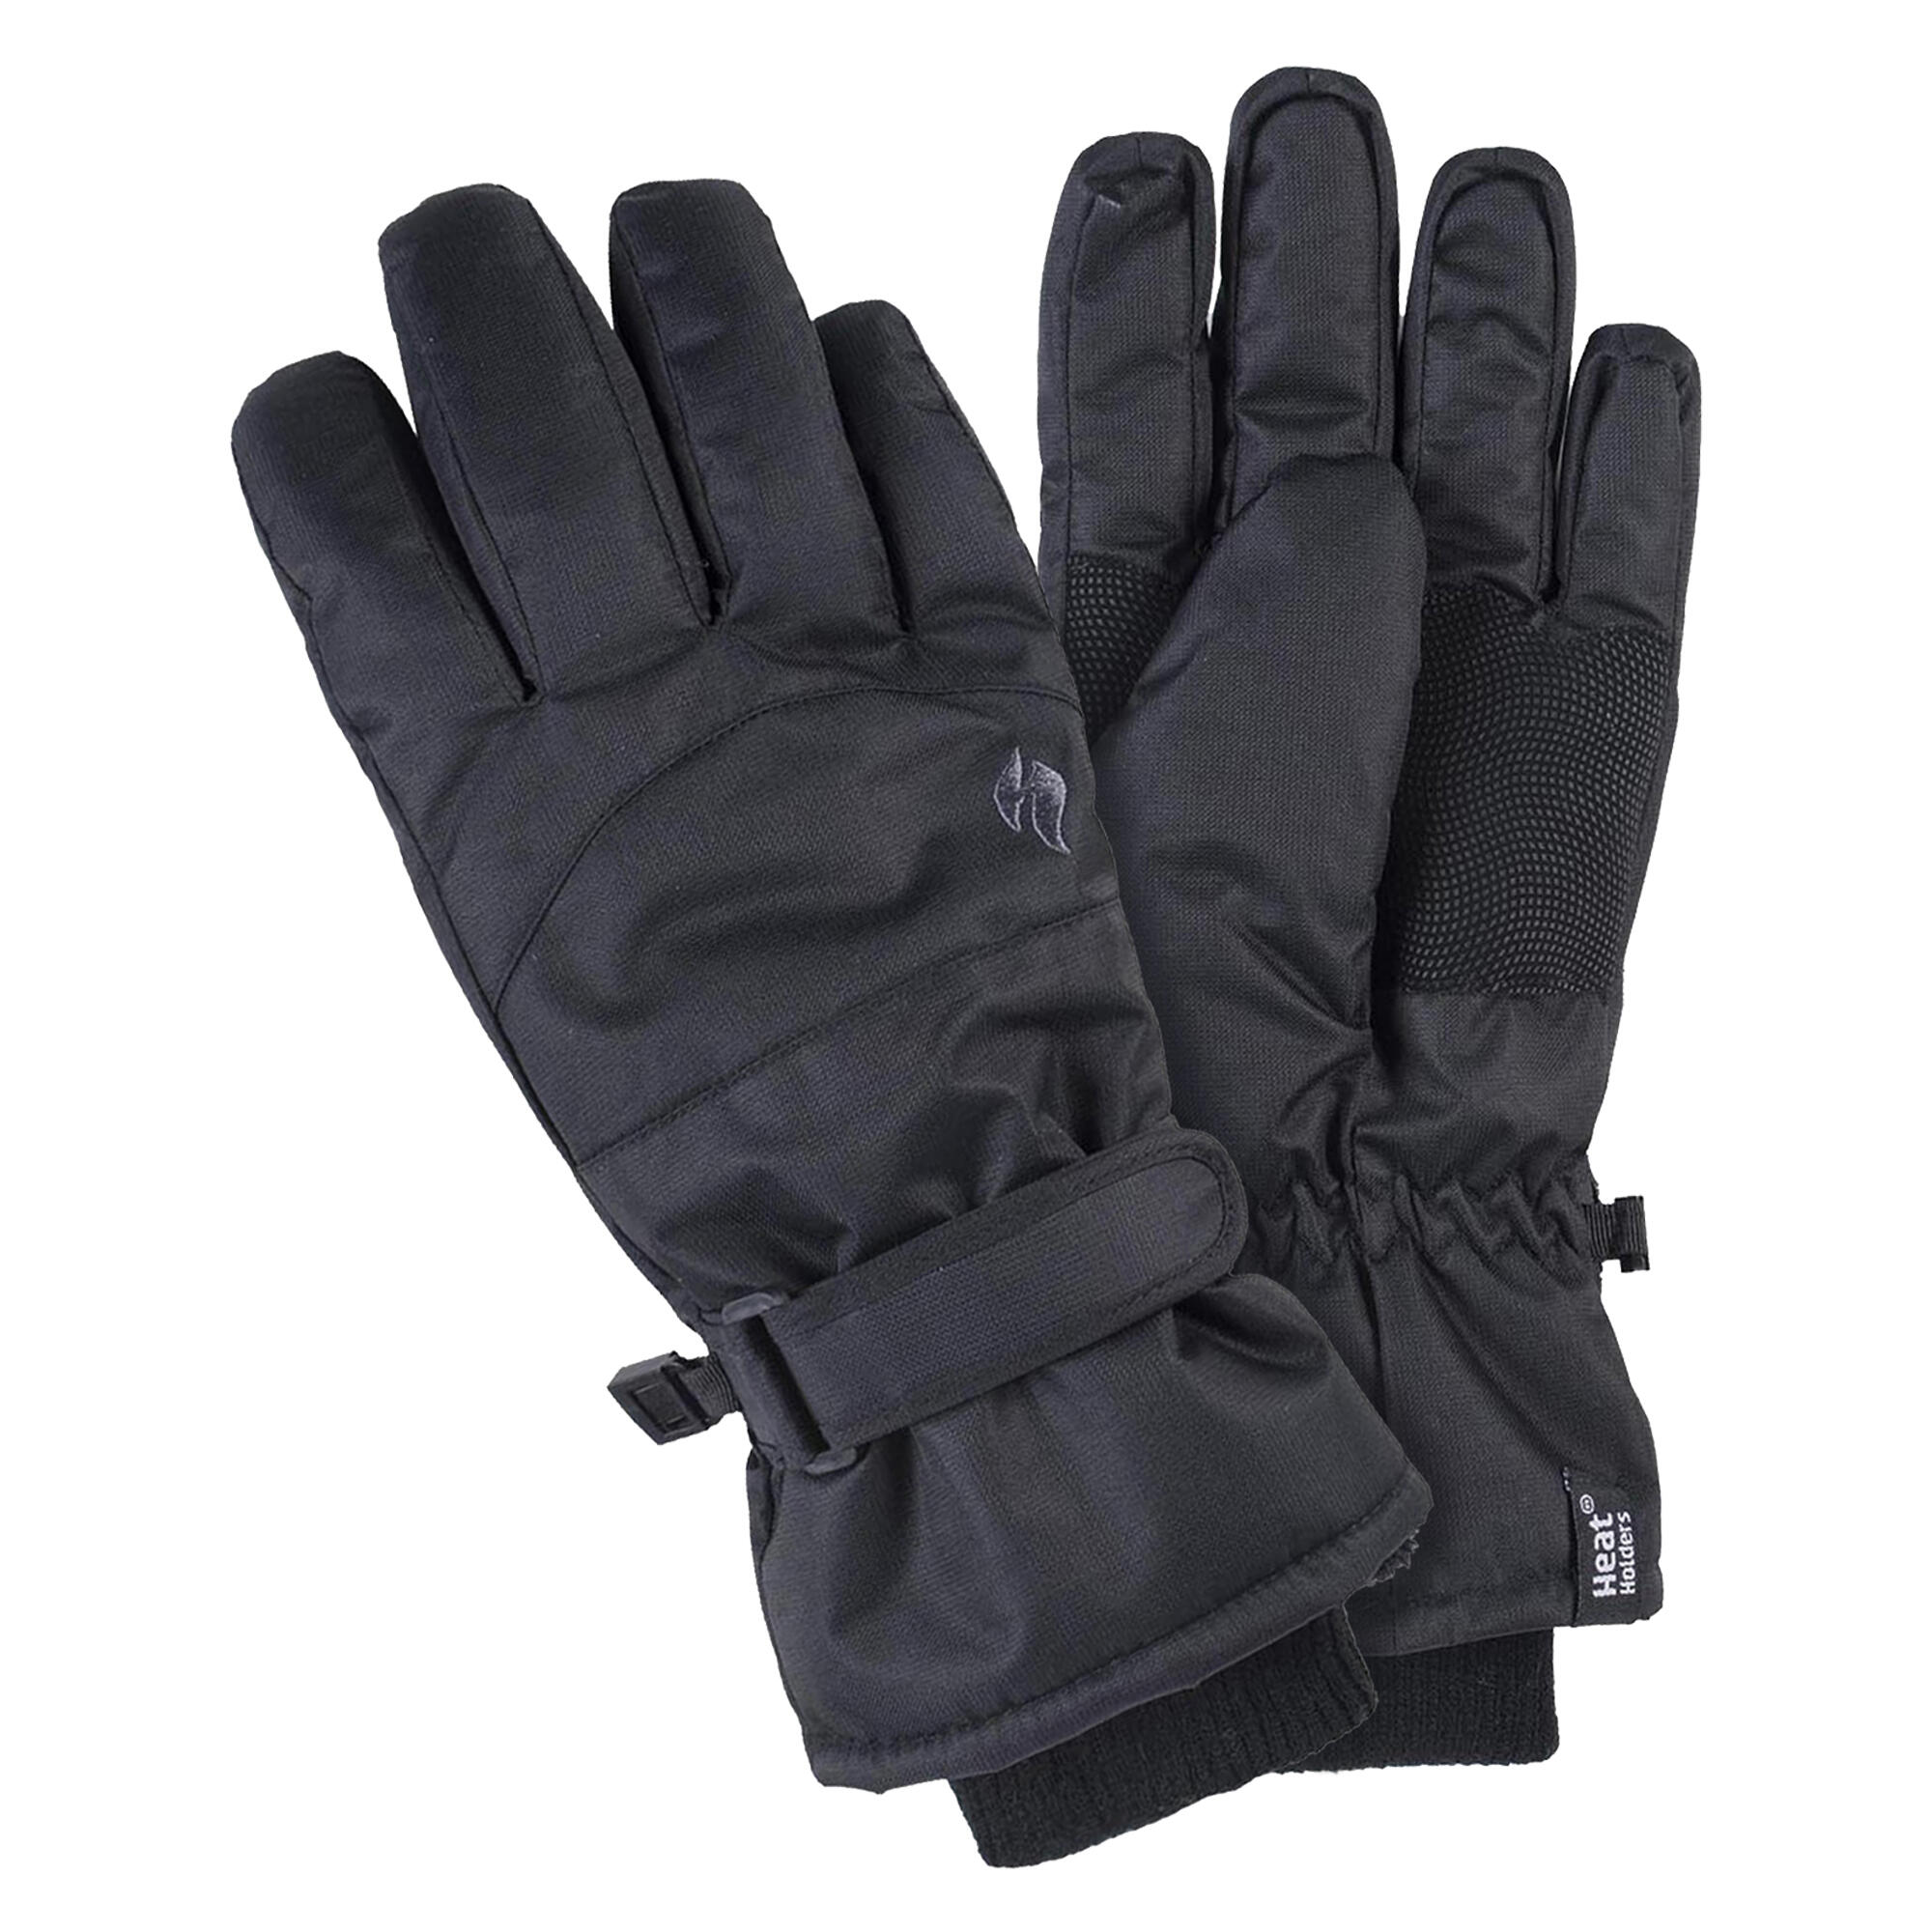 HEAT HOLDERS Mens Warm Padded Waterproof Insulated Thermal Ski Gloves